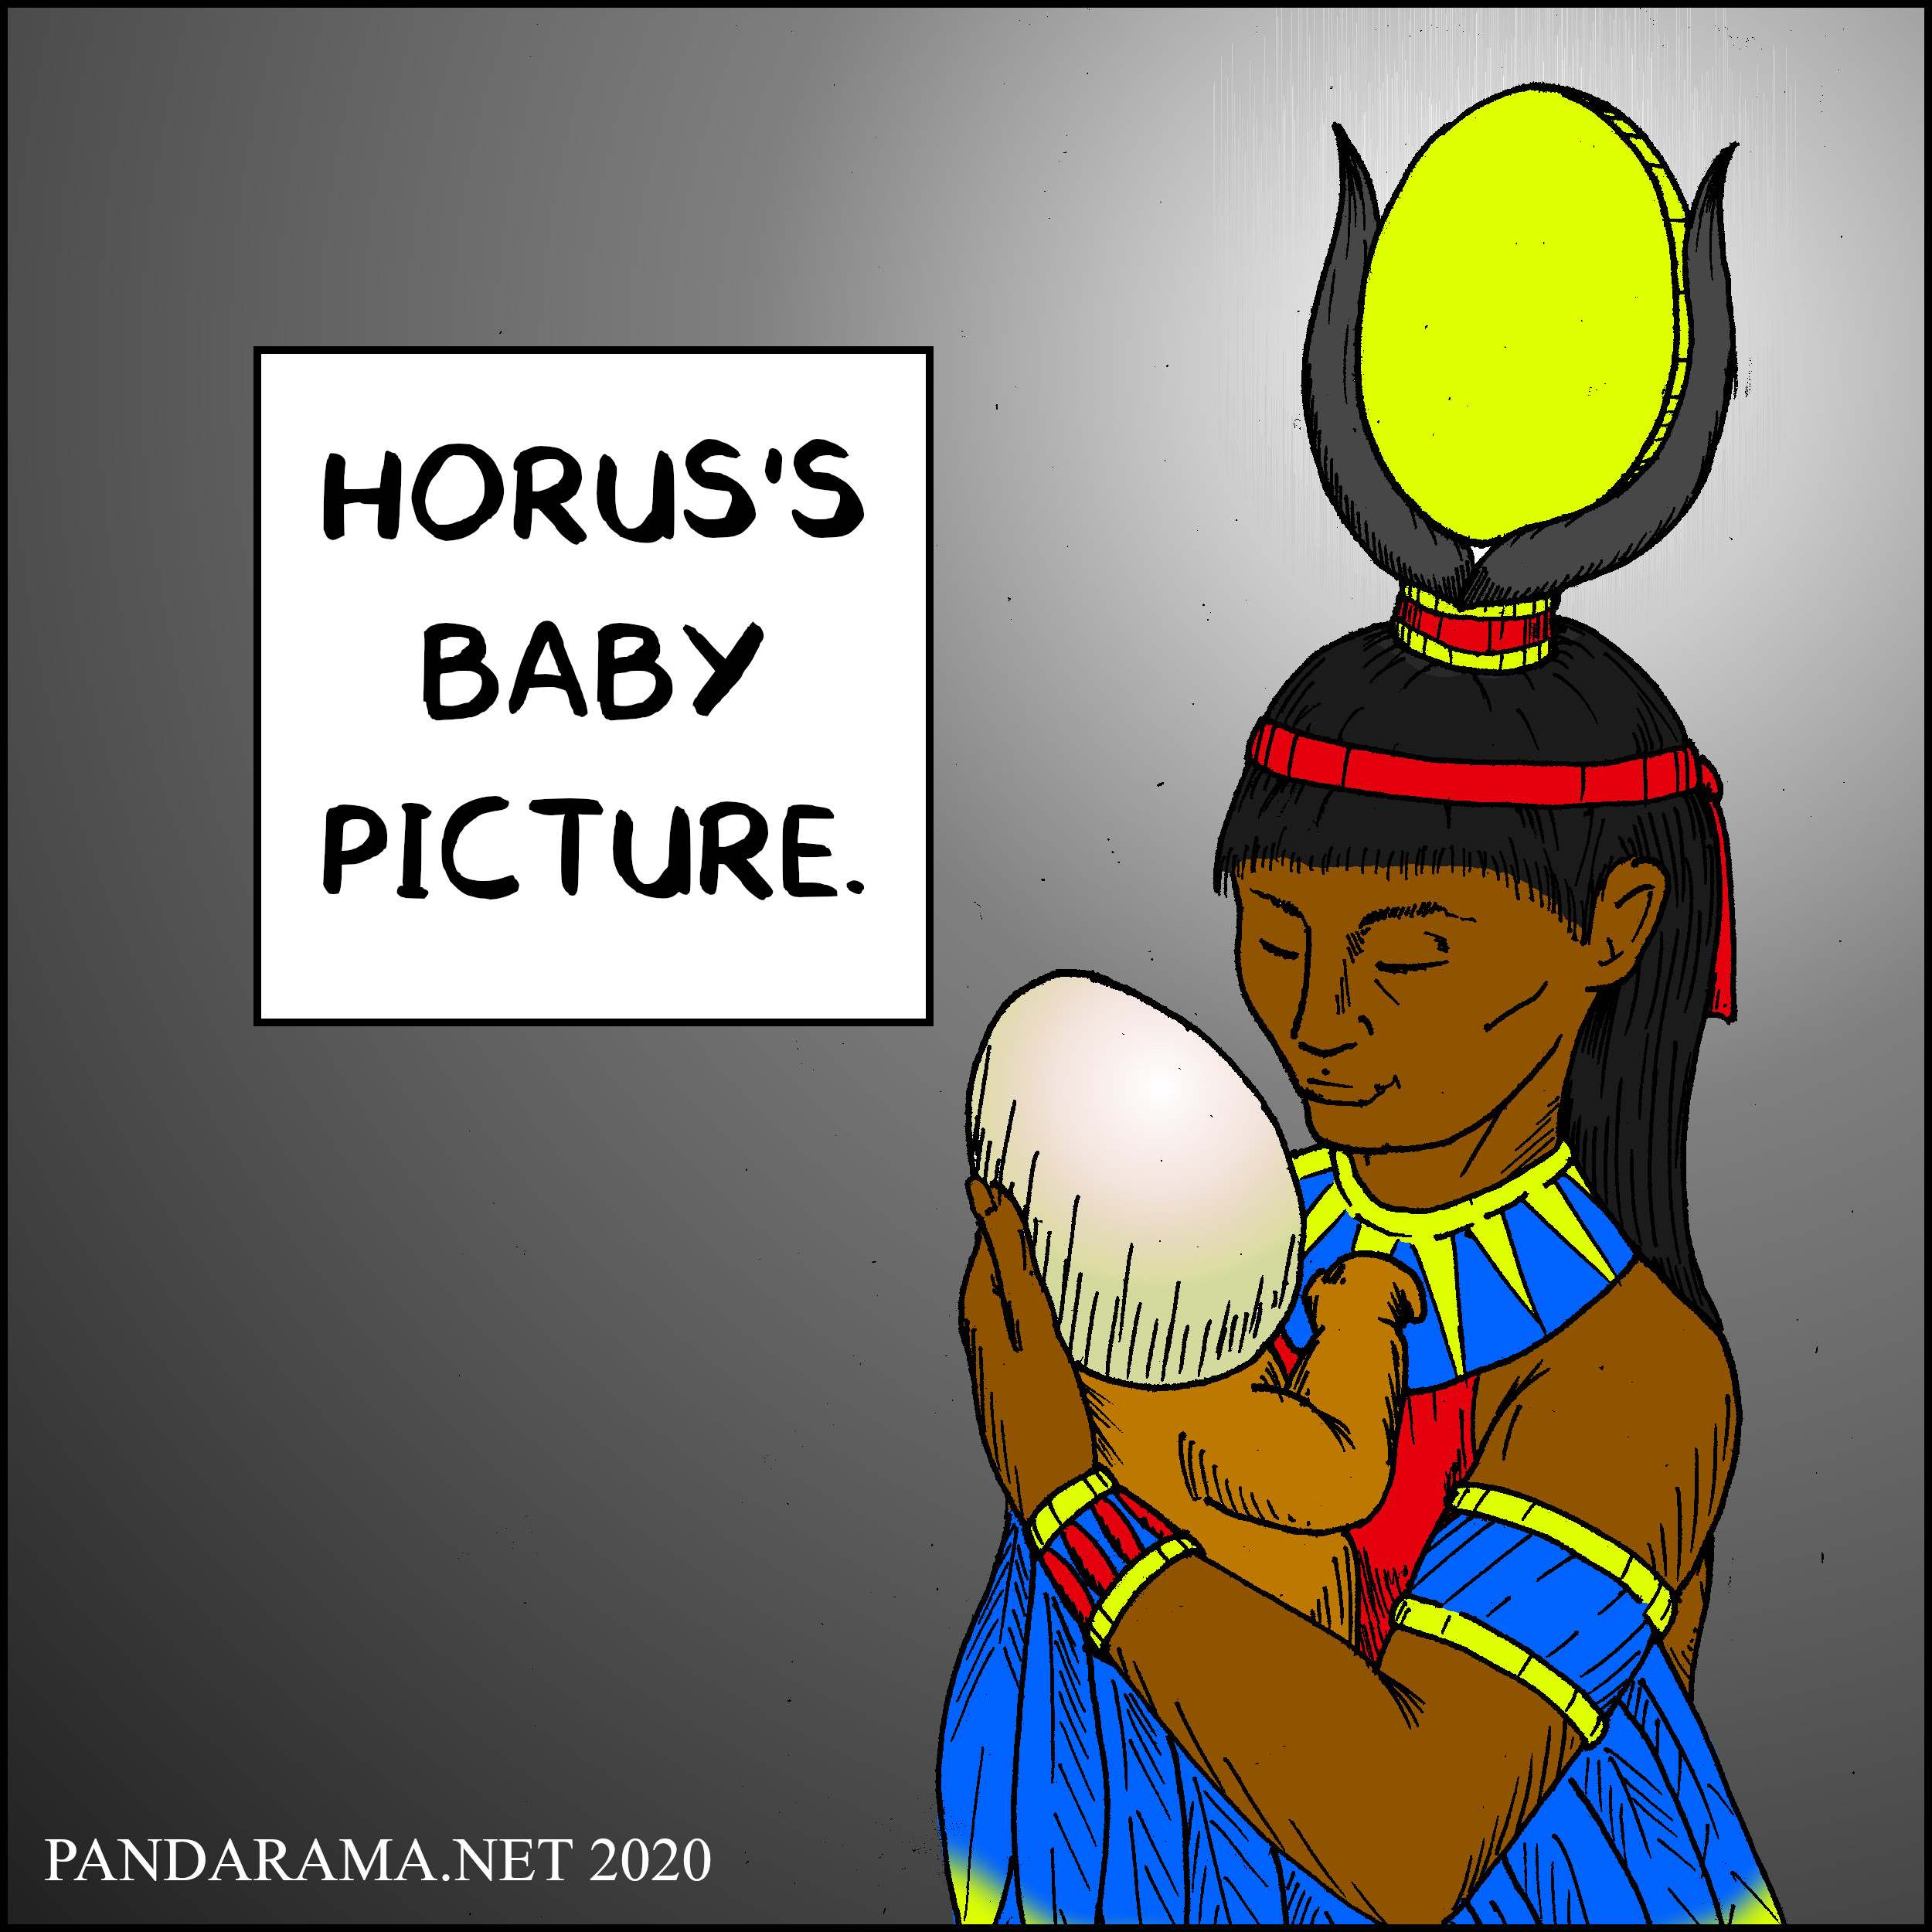 Horus, the Egyptian got with a hawk head was egg-headed baby.